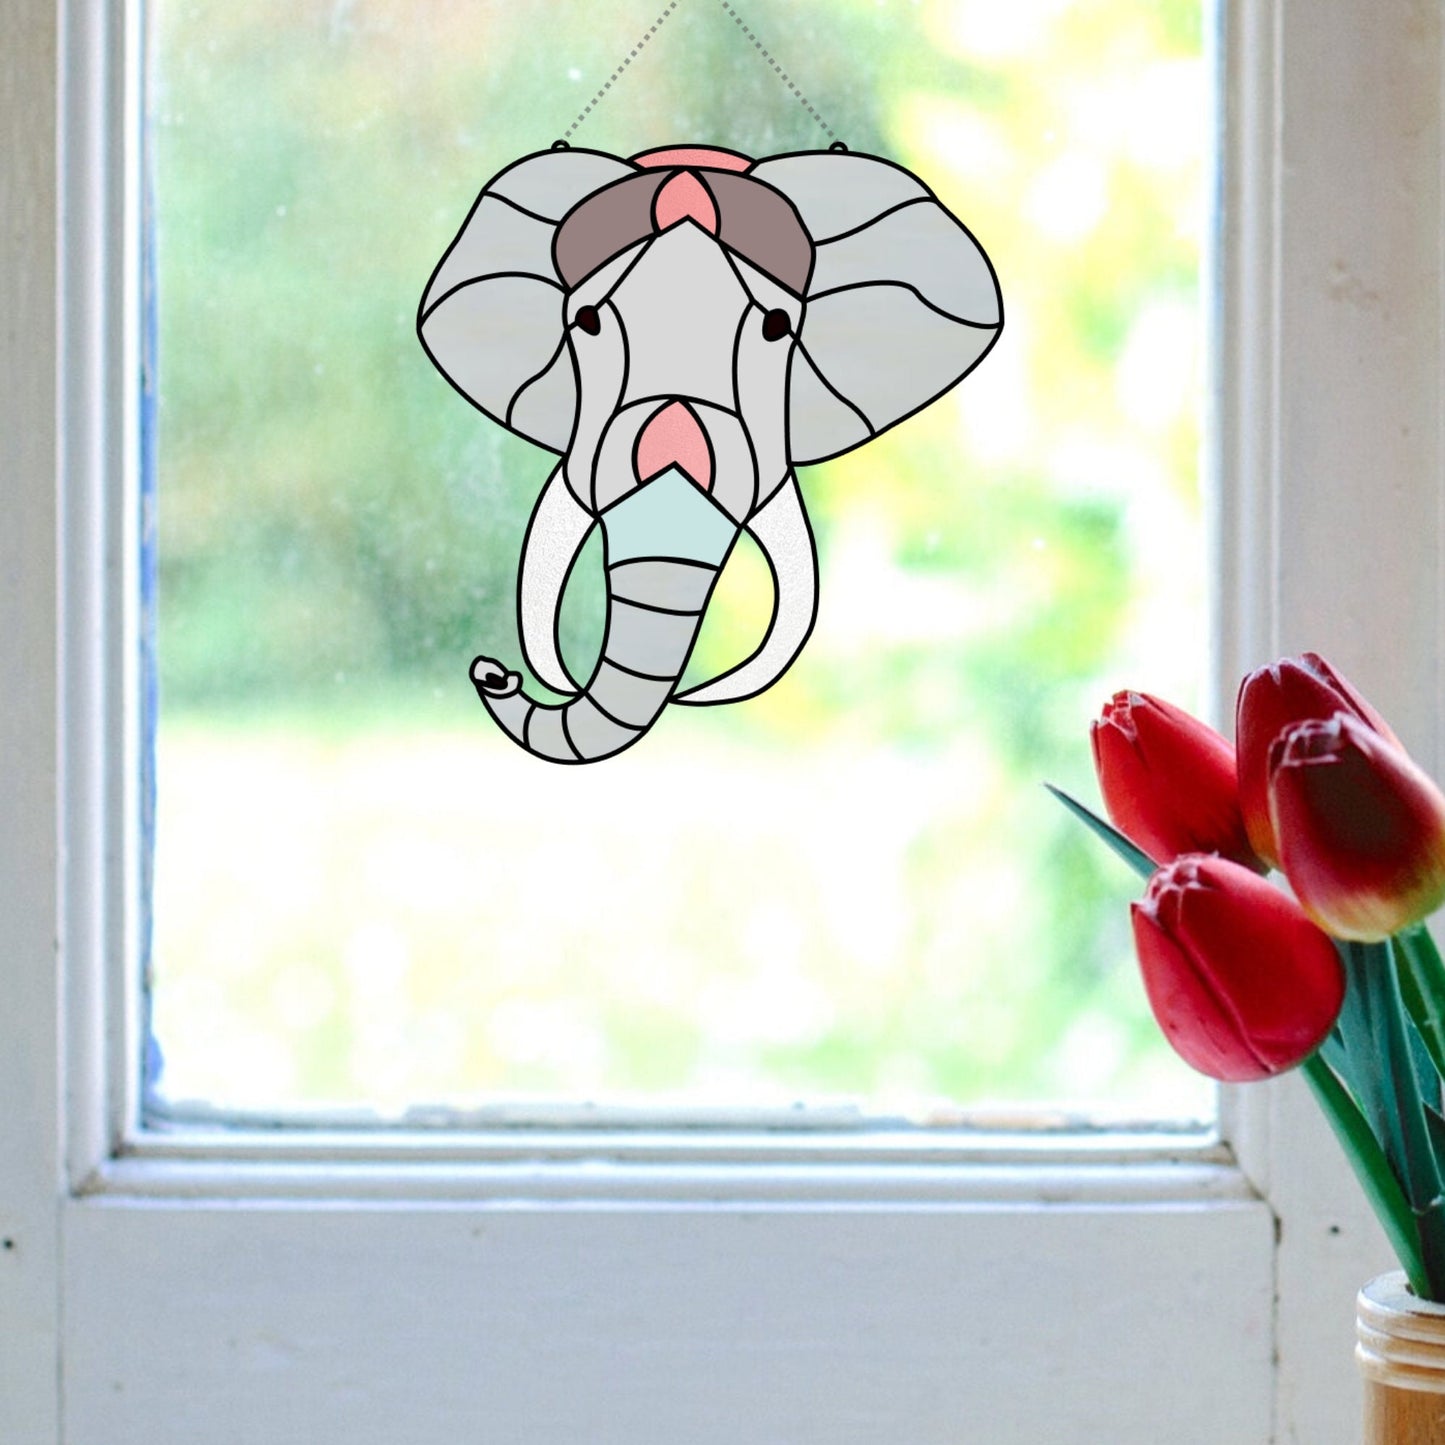 Elephant Stained Glass Pattern - Suncatcher Digital Download Pattern